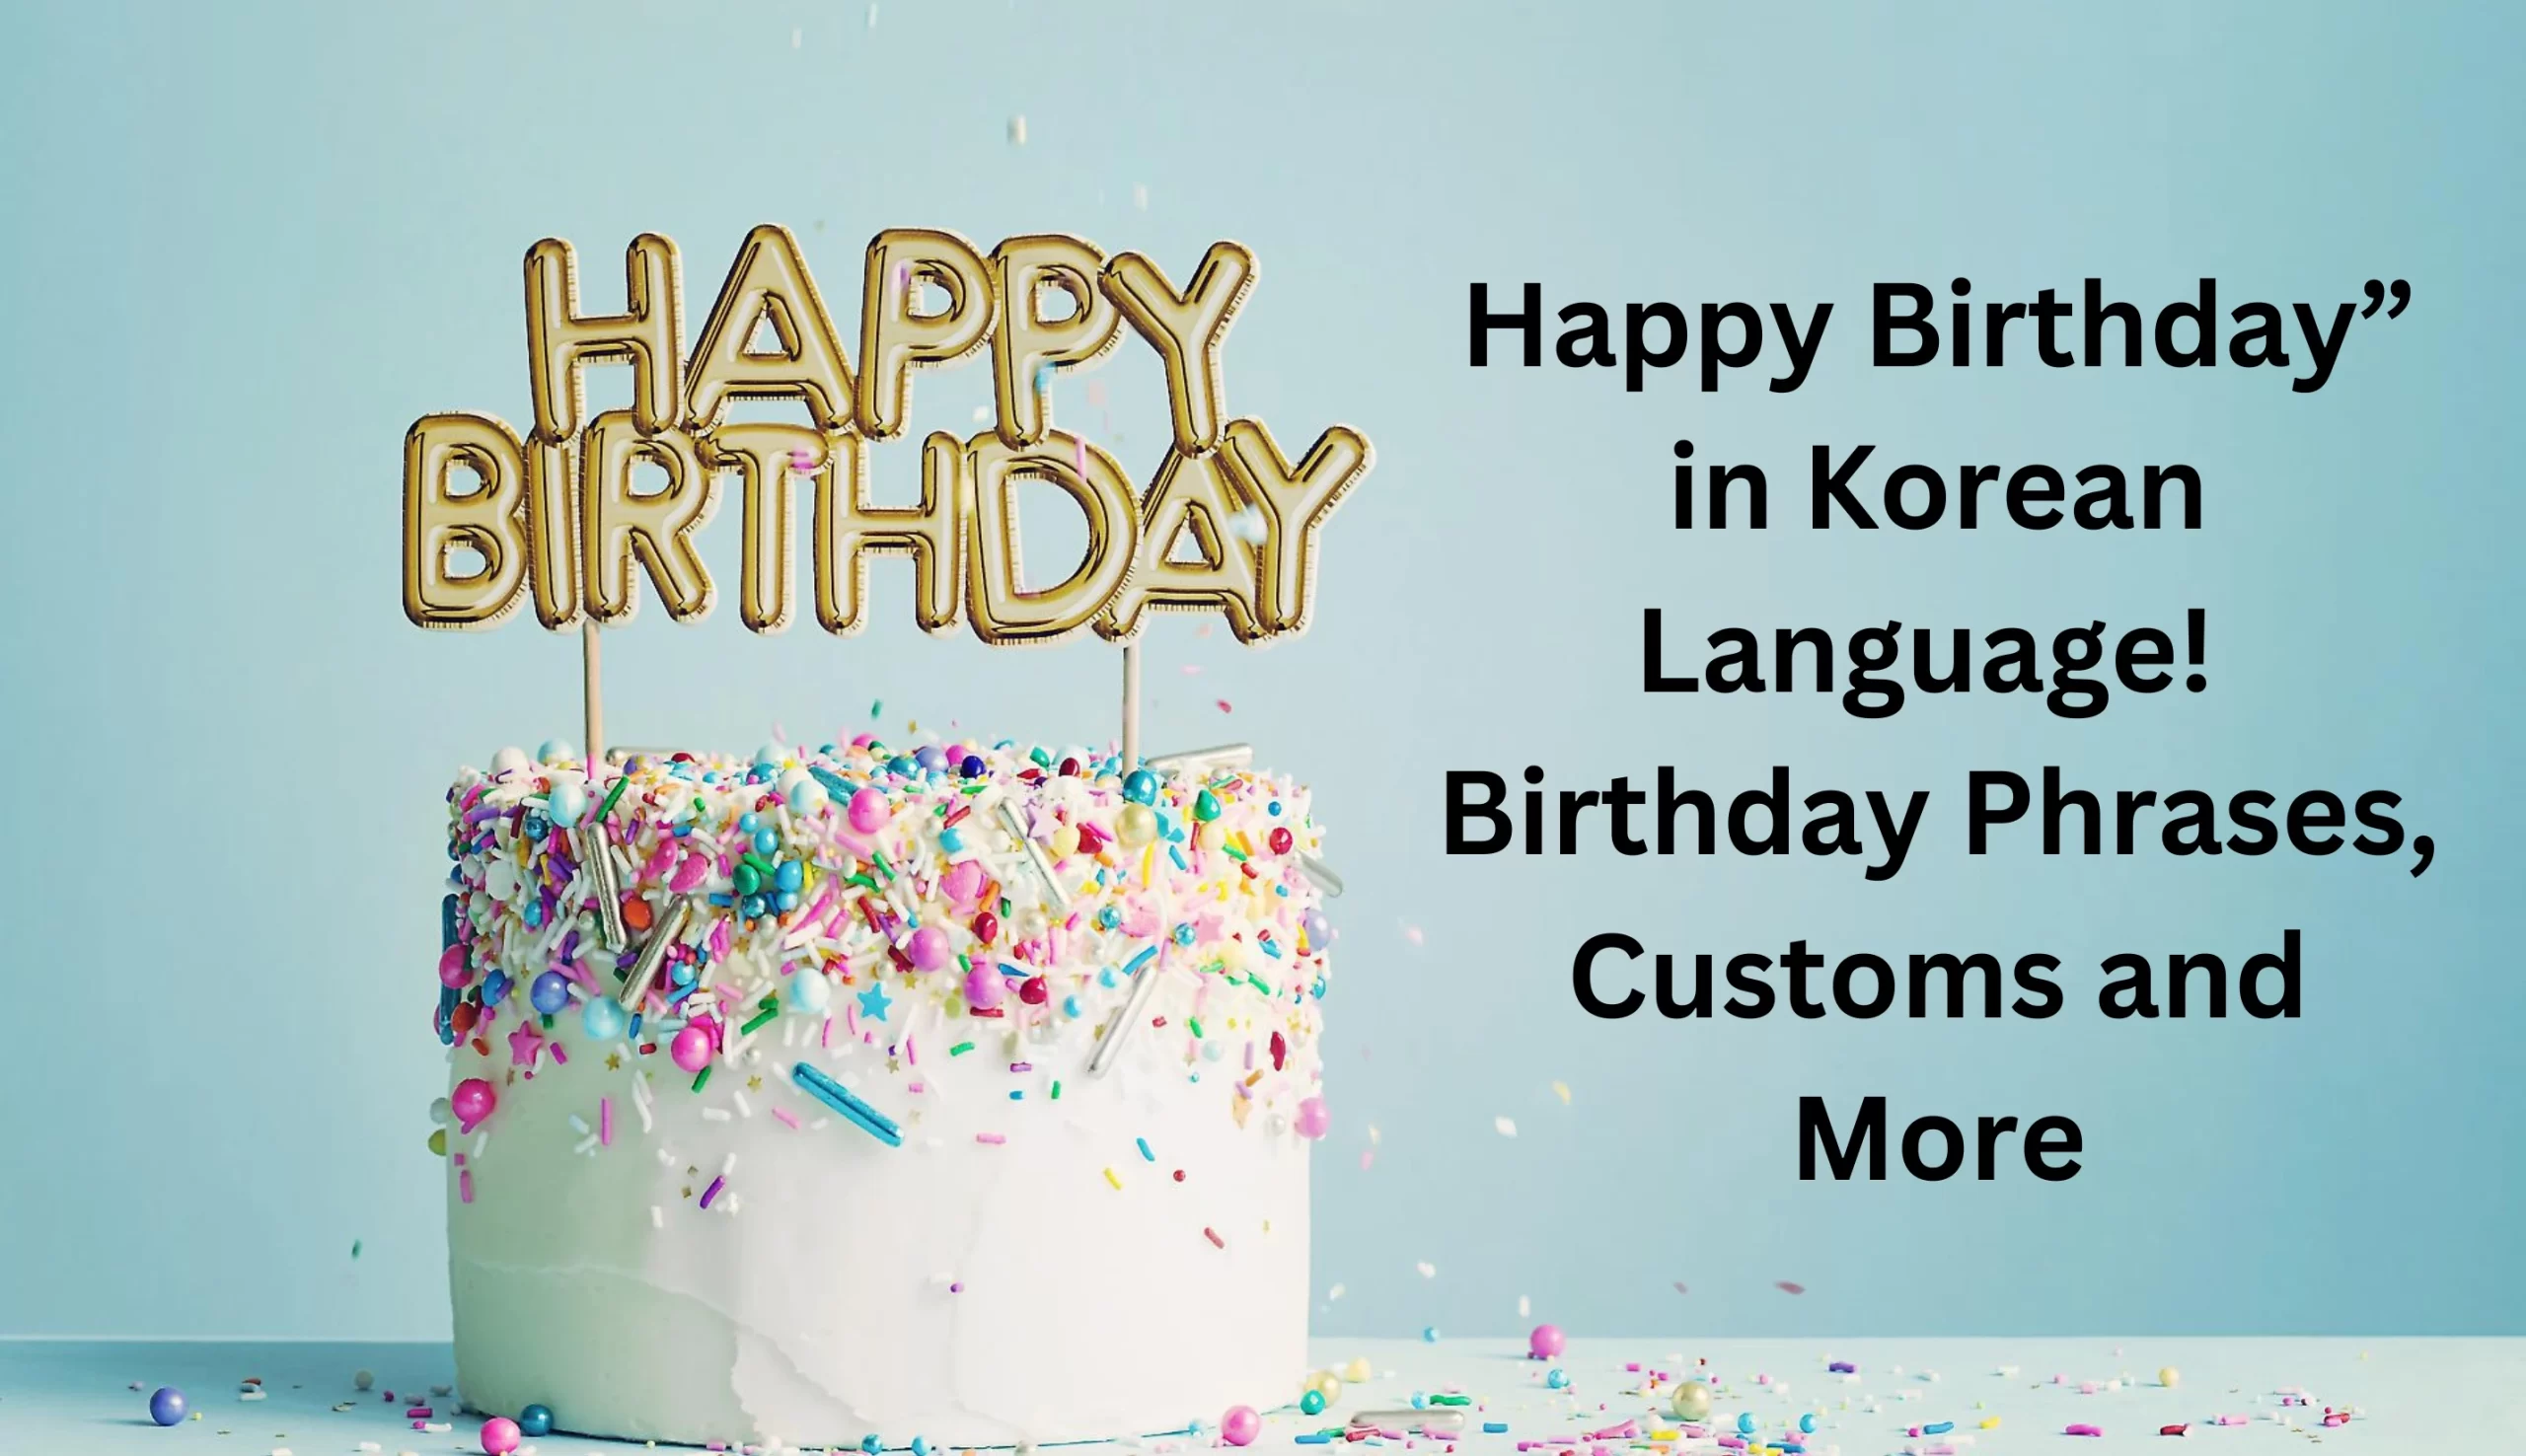 Happy Birthday in Korean Language! Birthday Phrases, Customs and More